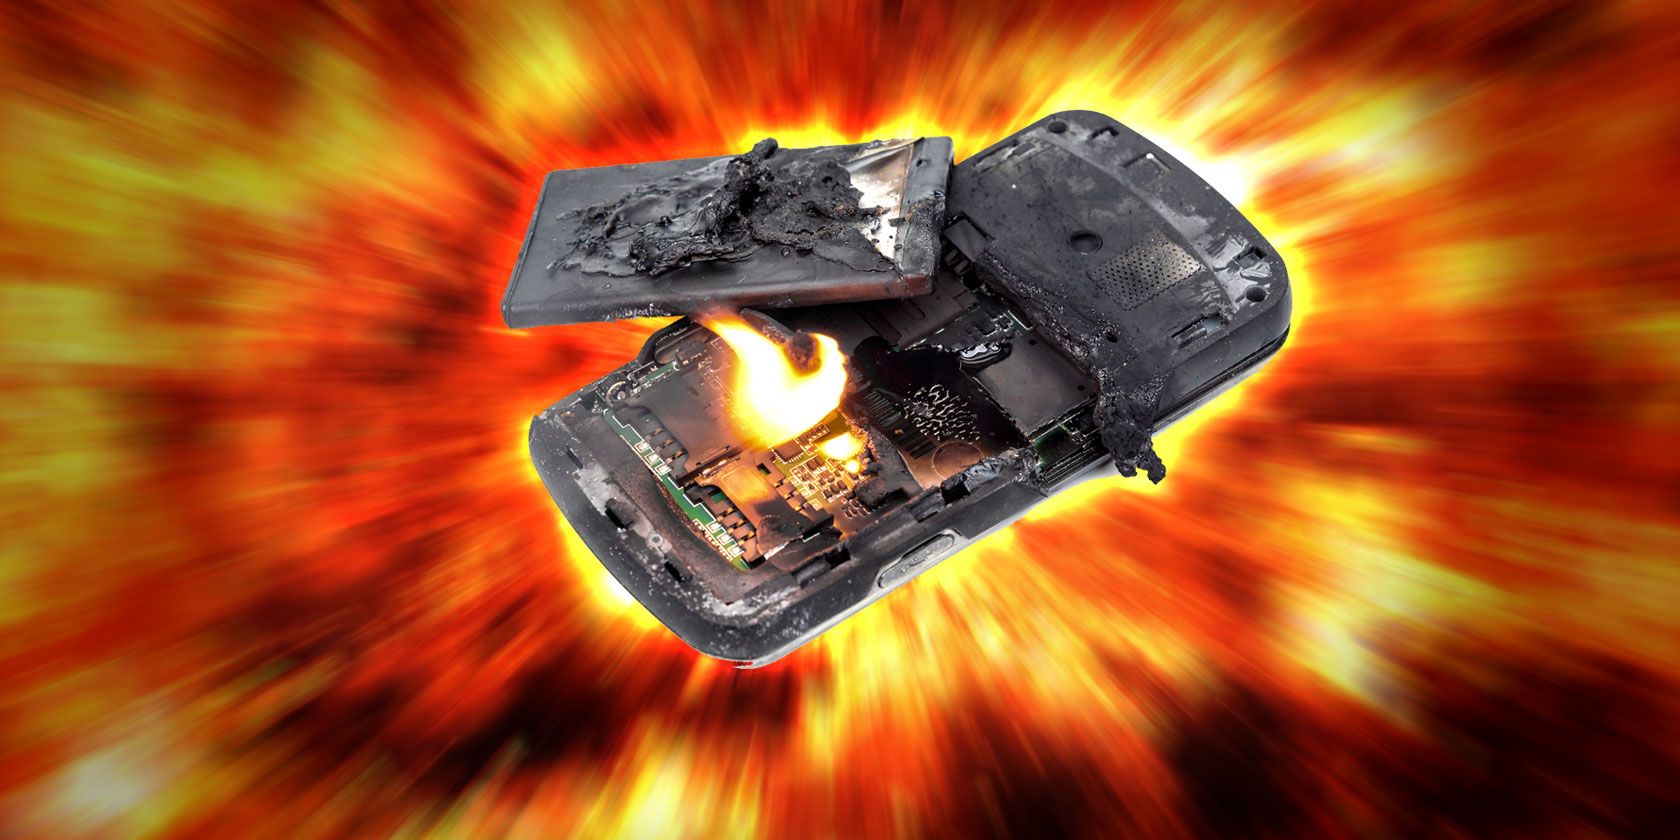 smartphones-explode-prevent